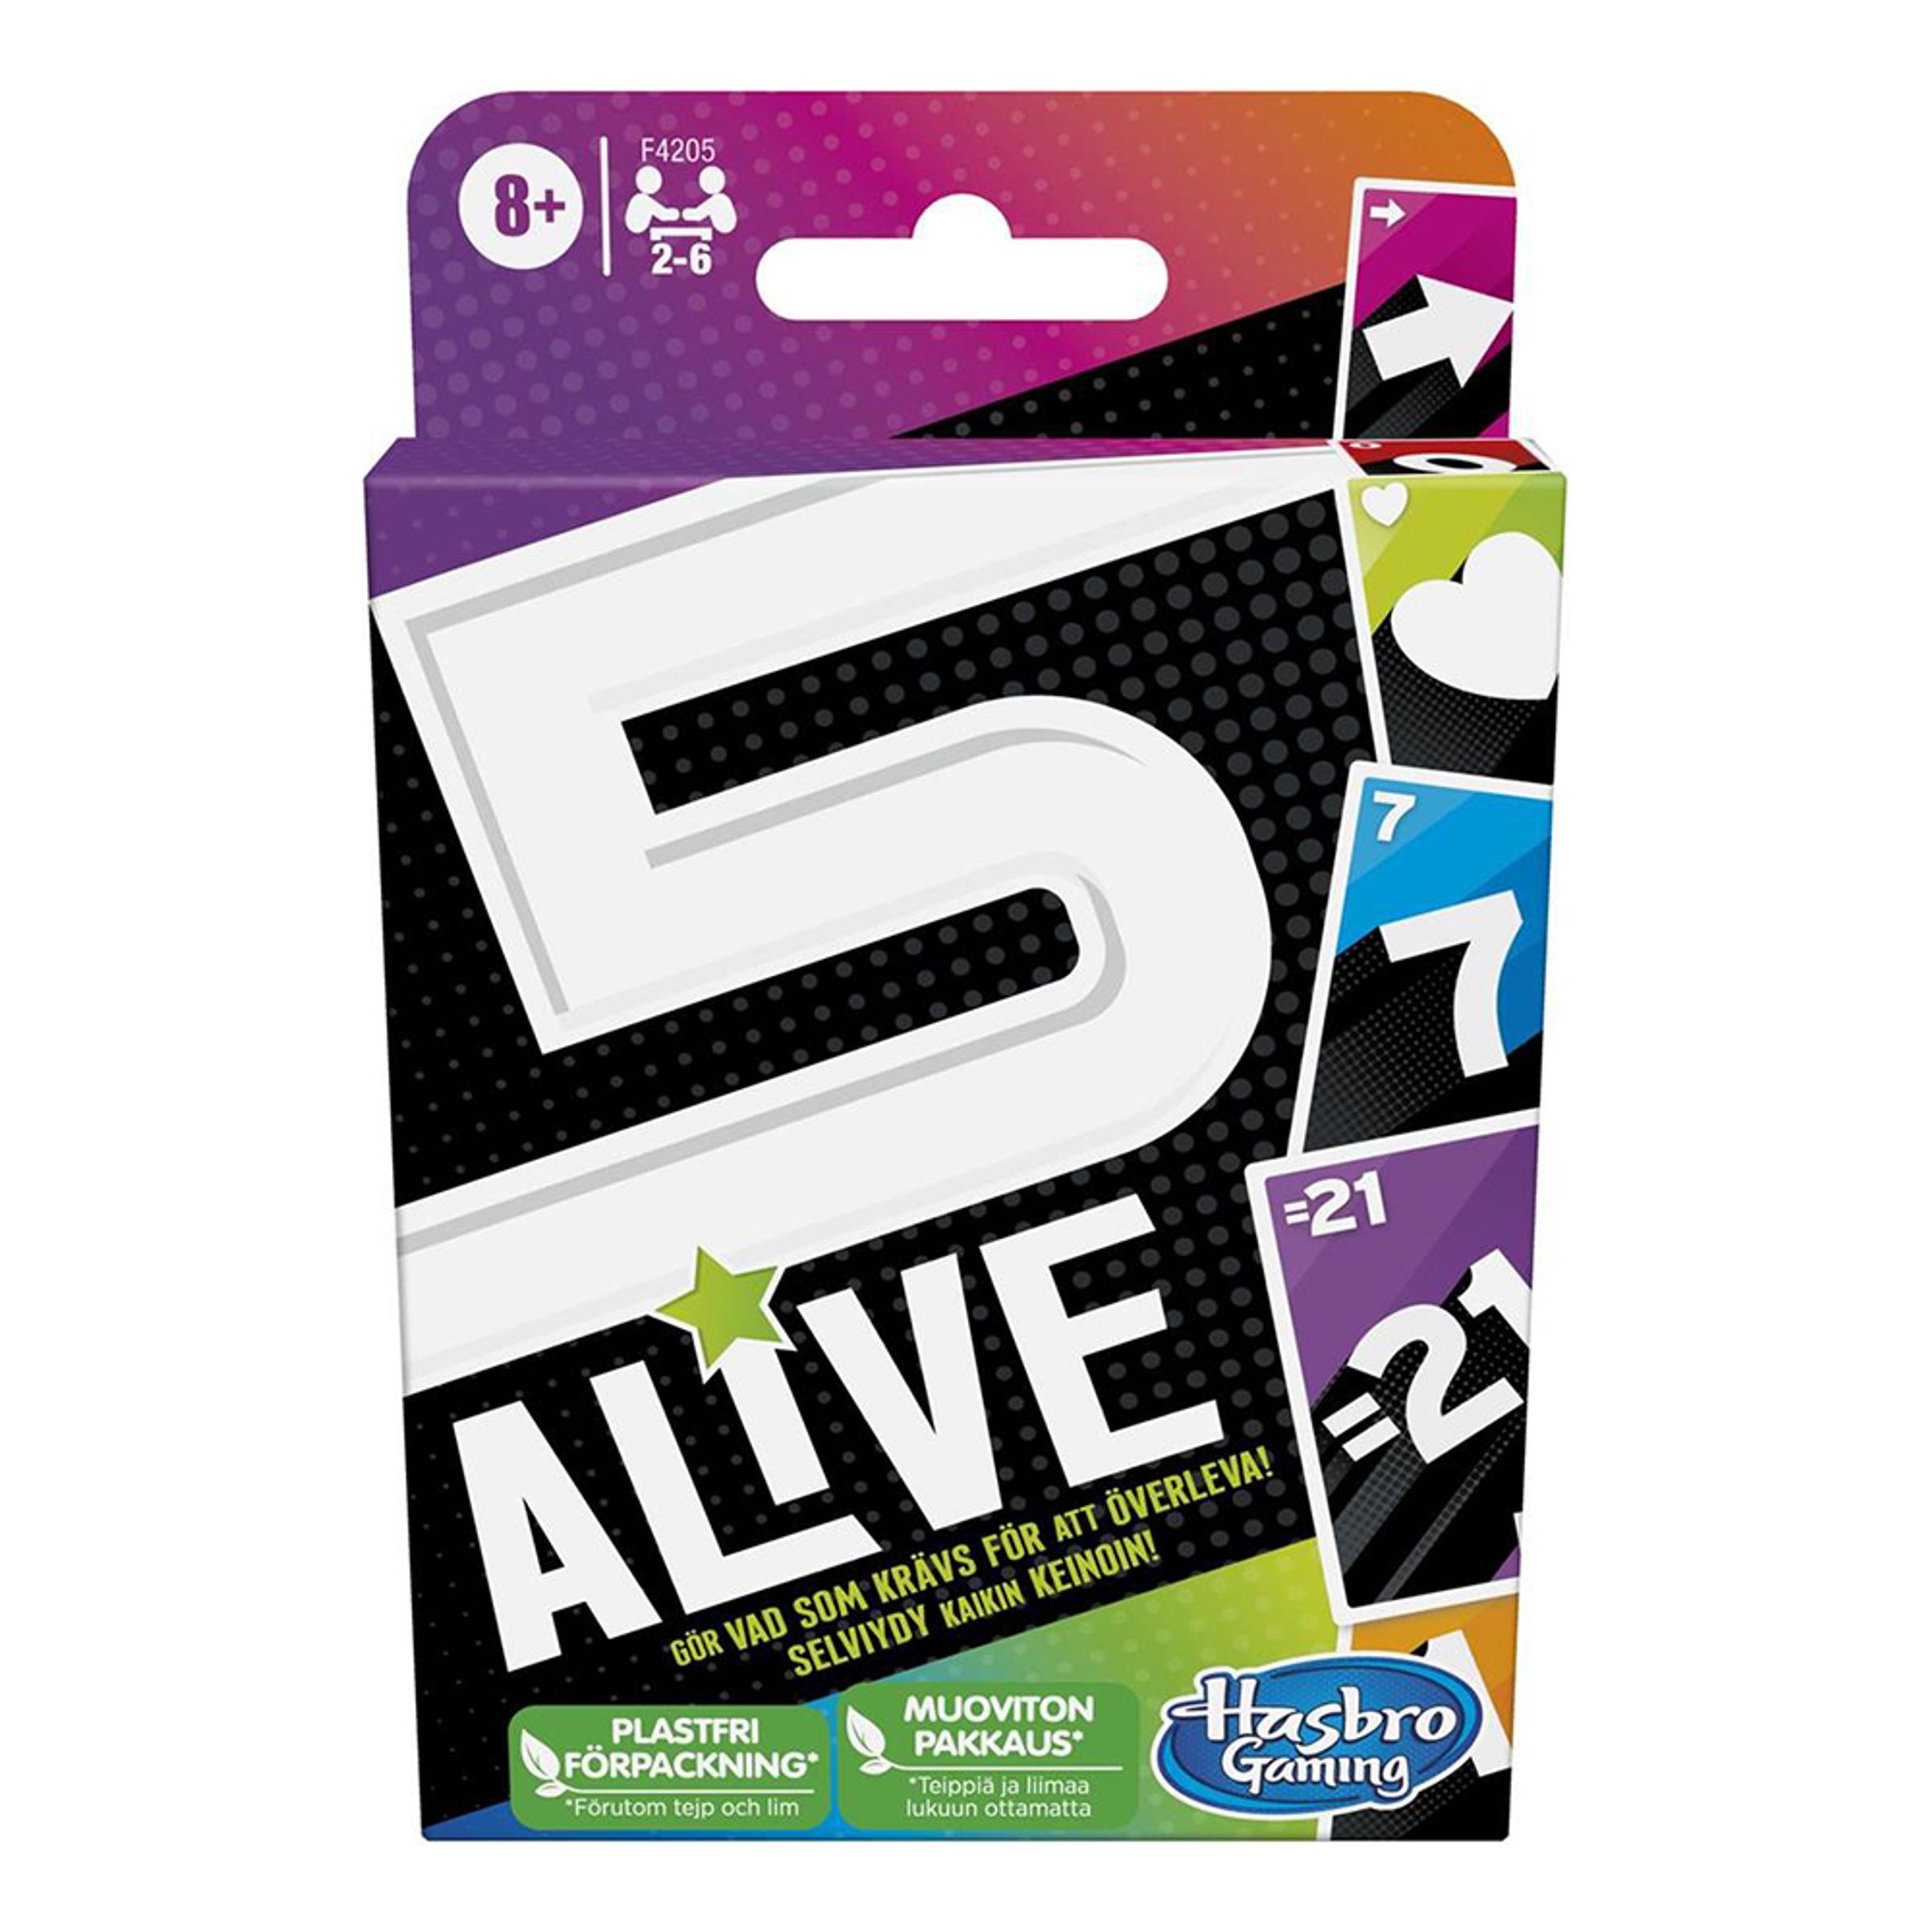 5 Alive Kortspel